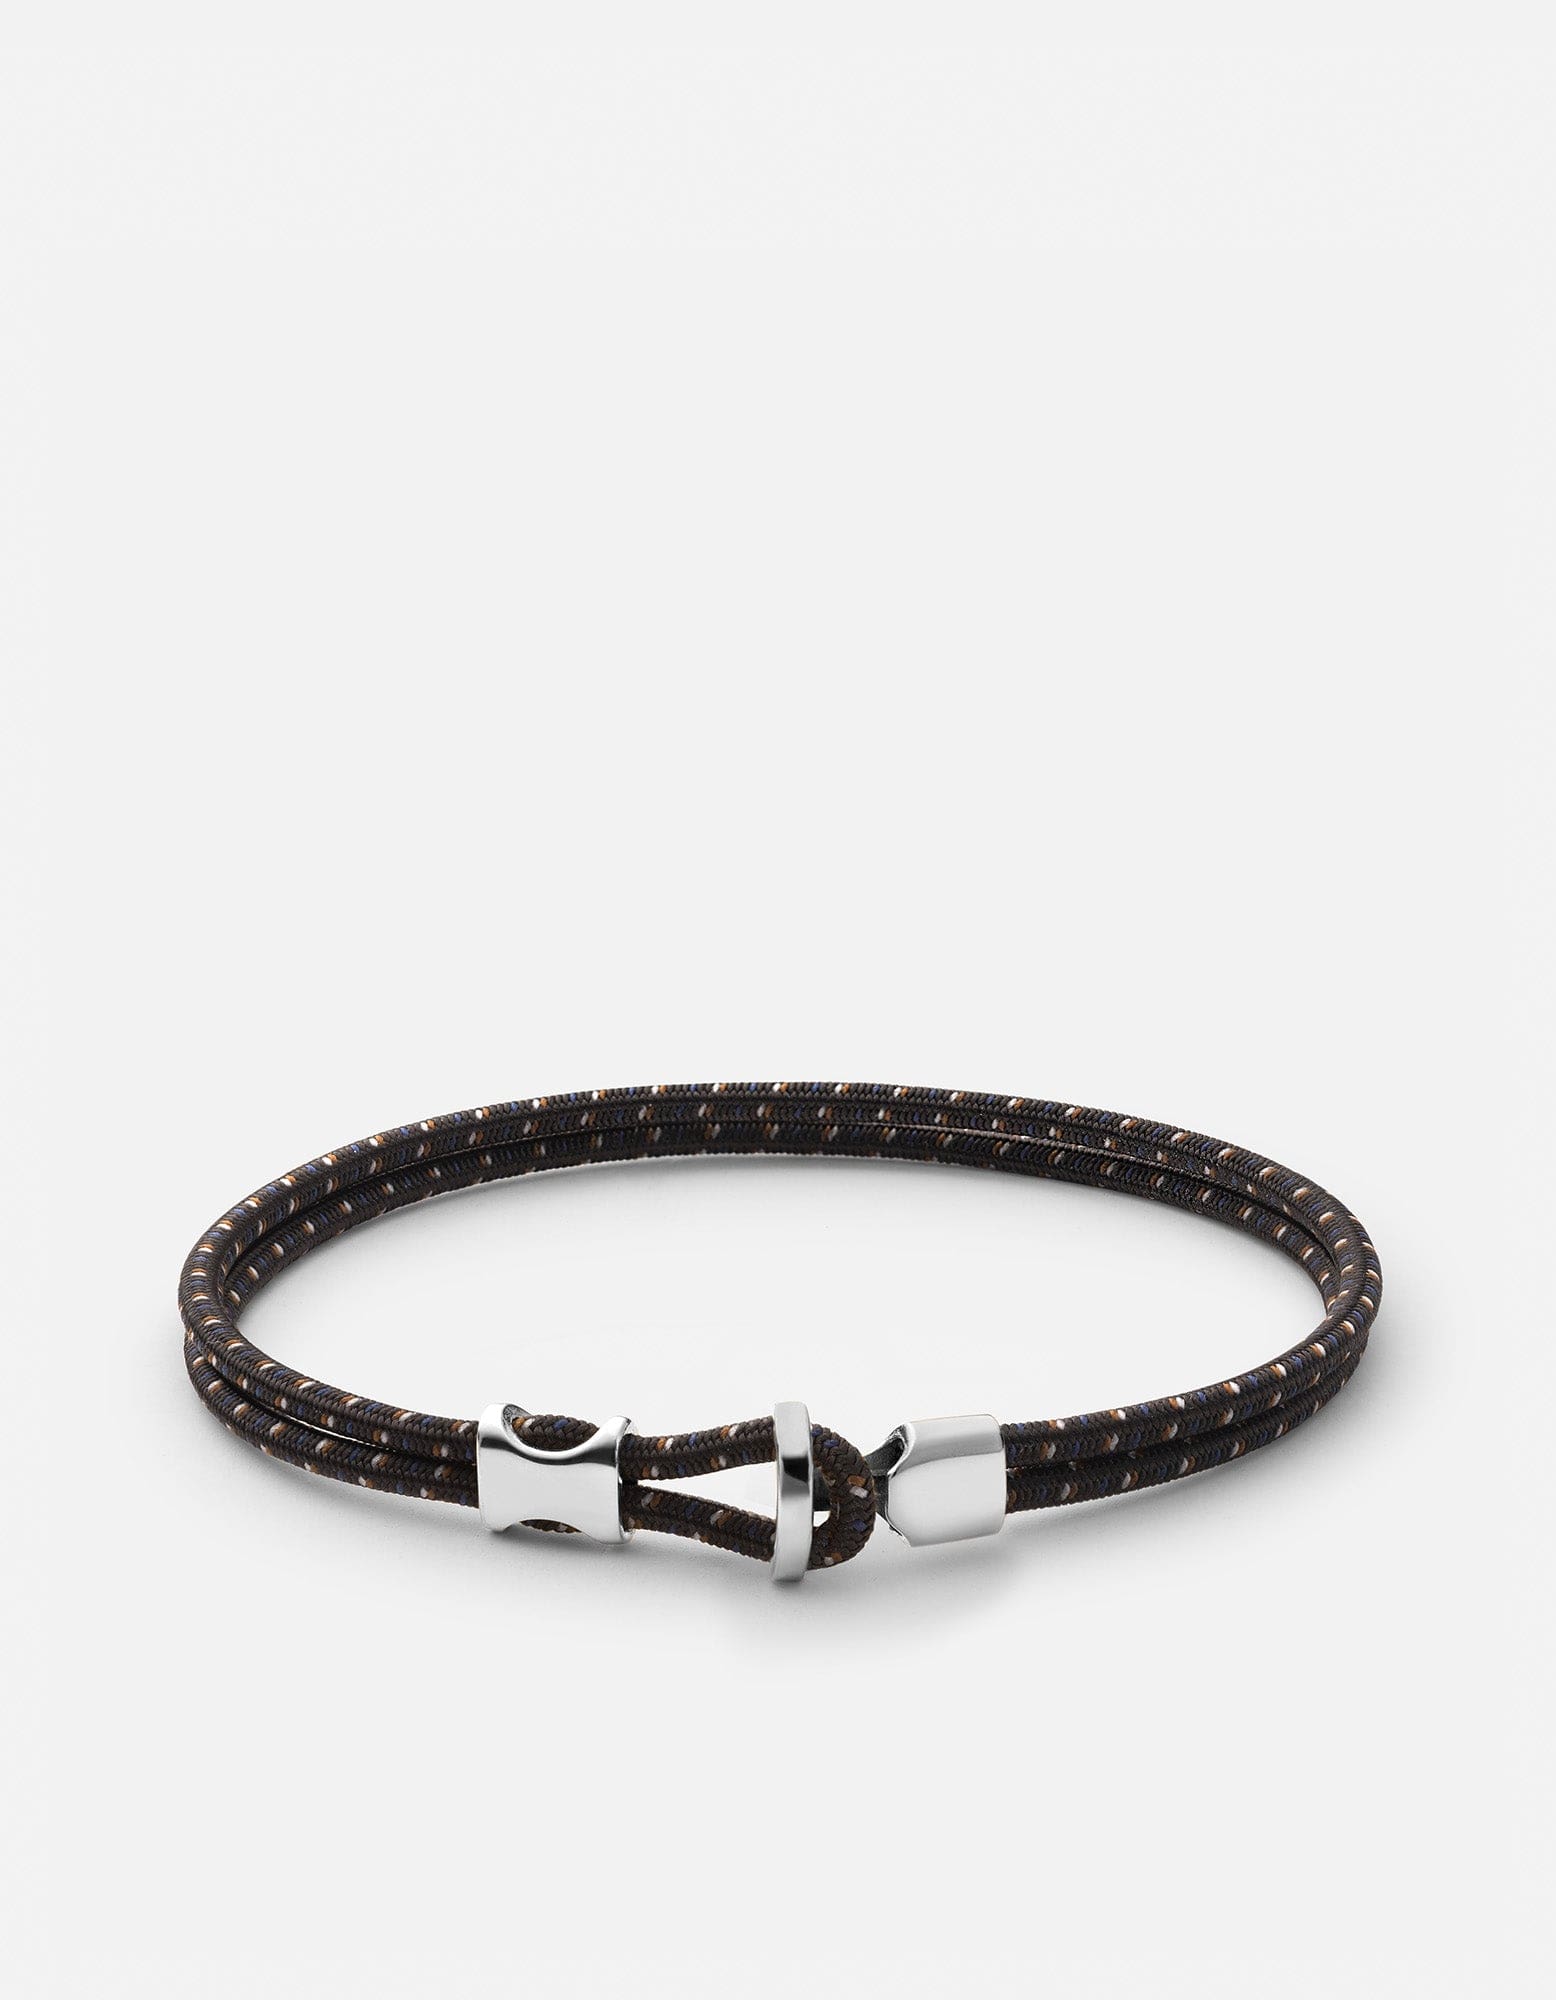 Orson Loop Bungee Rope Bracelet, Sterling Silver | Men's Bracelets